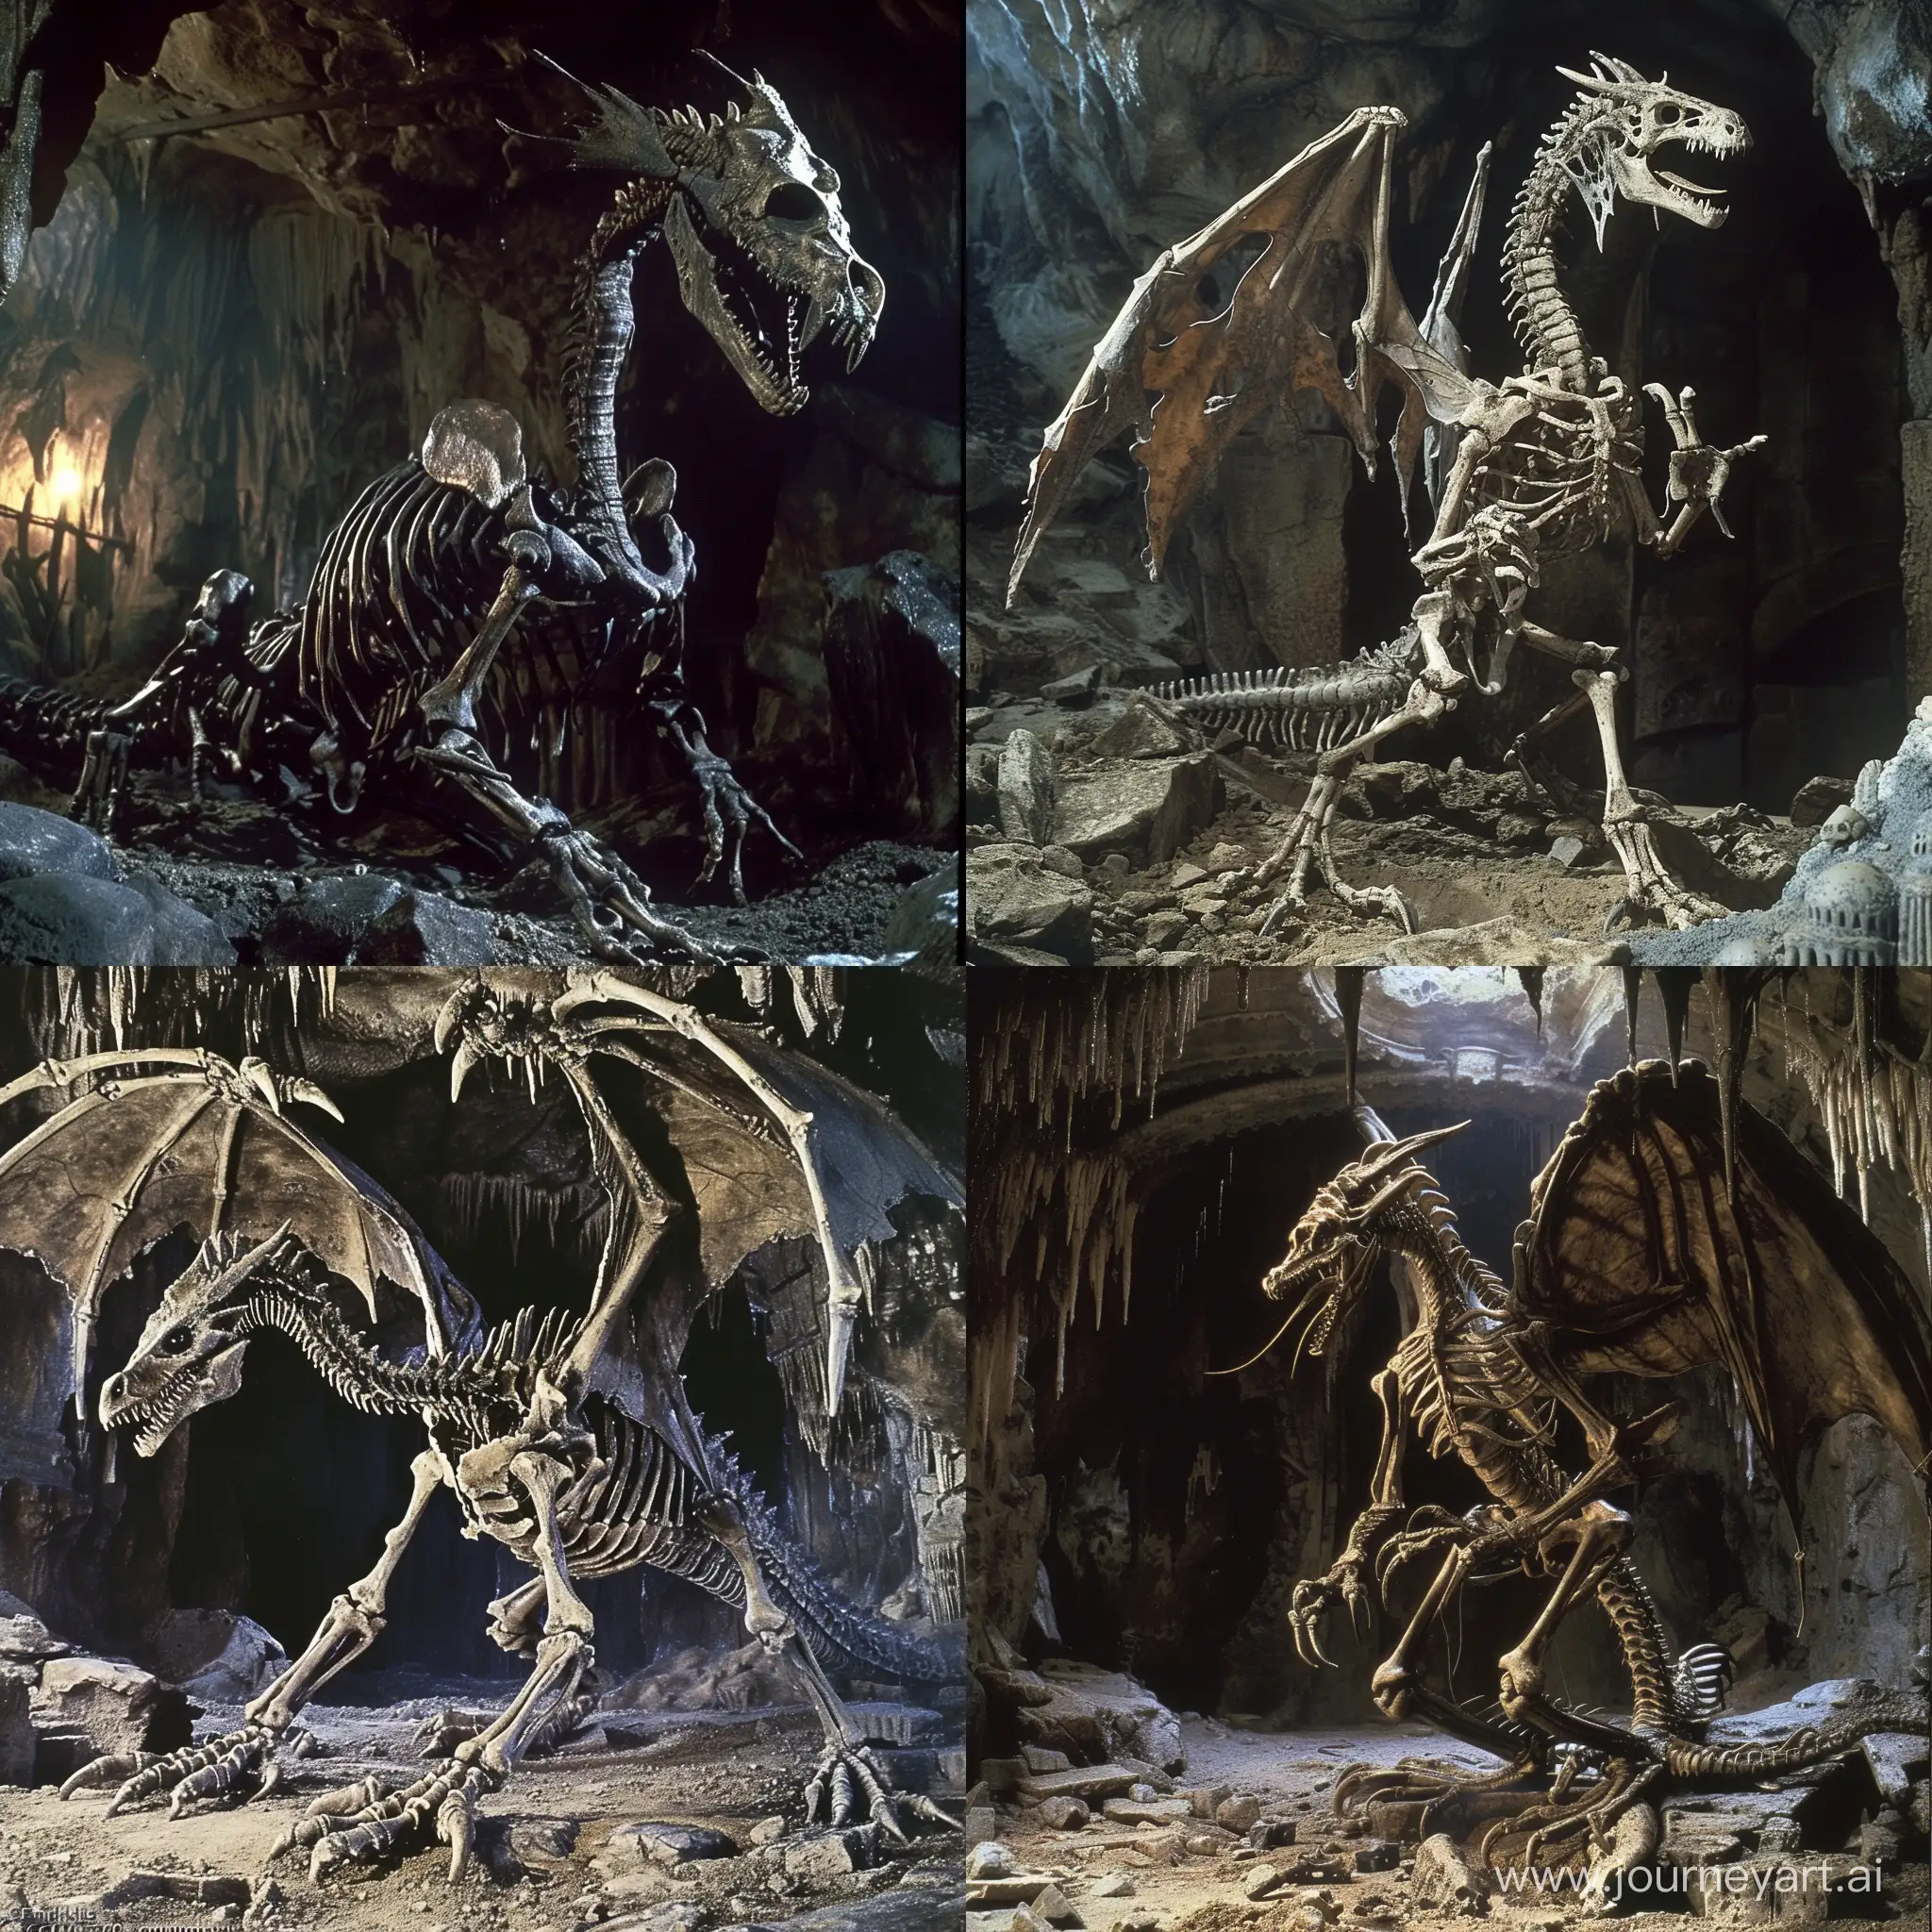 dvd screenengrabs character/arx fatalis undead bone dragon within underground crypt dark fantasy 1980 style